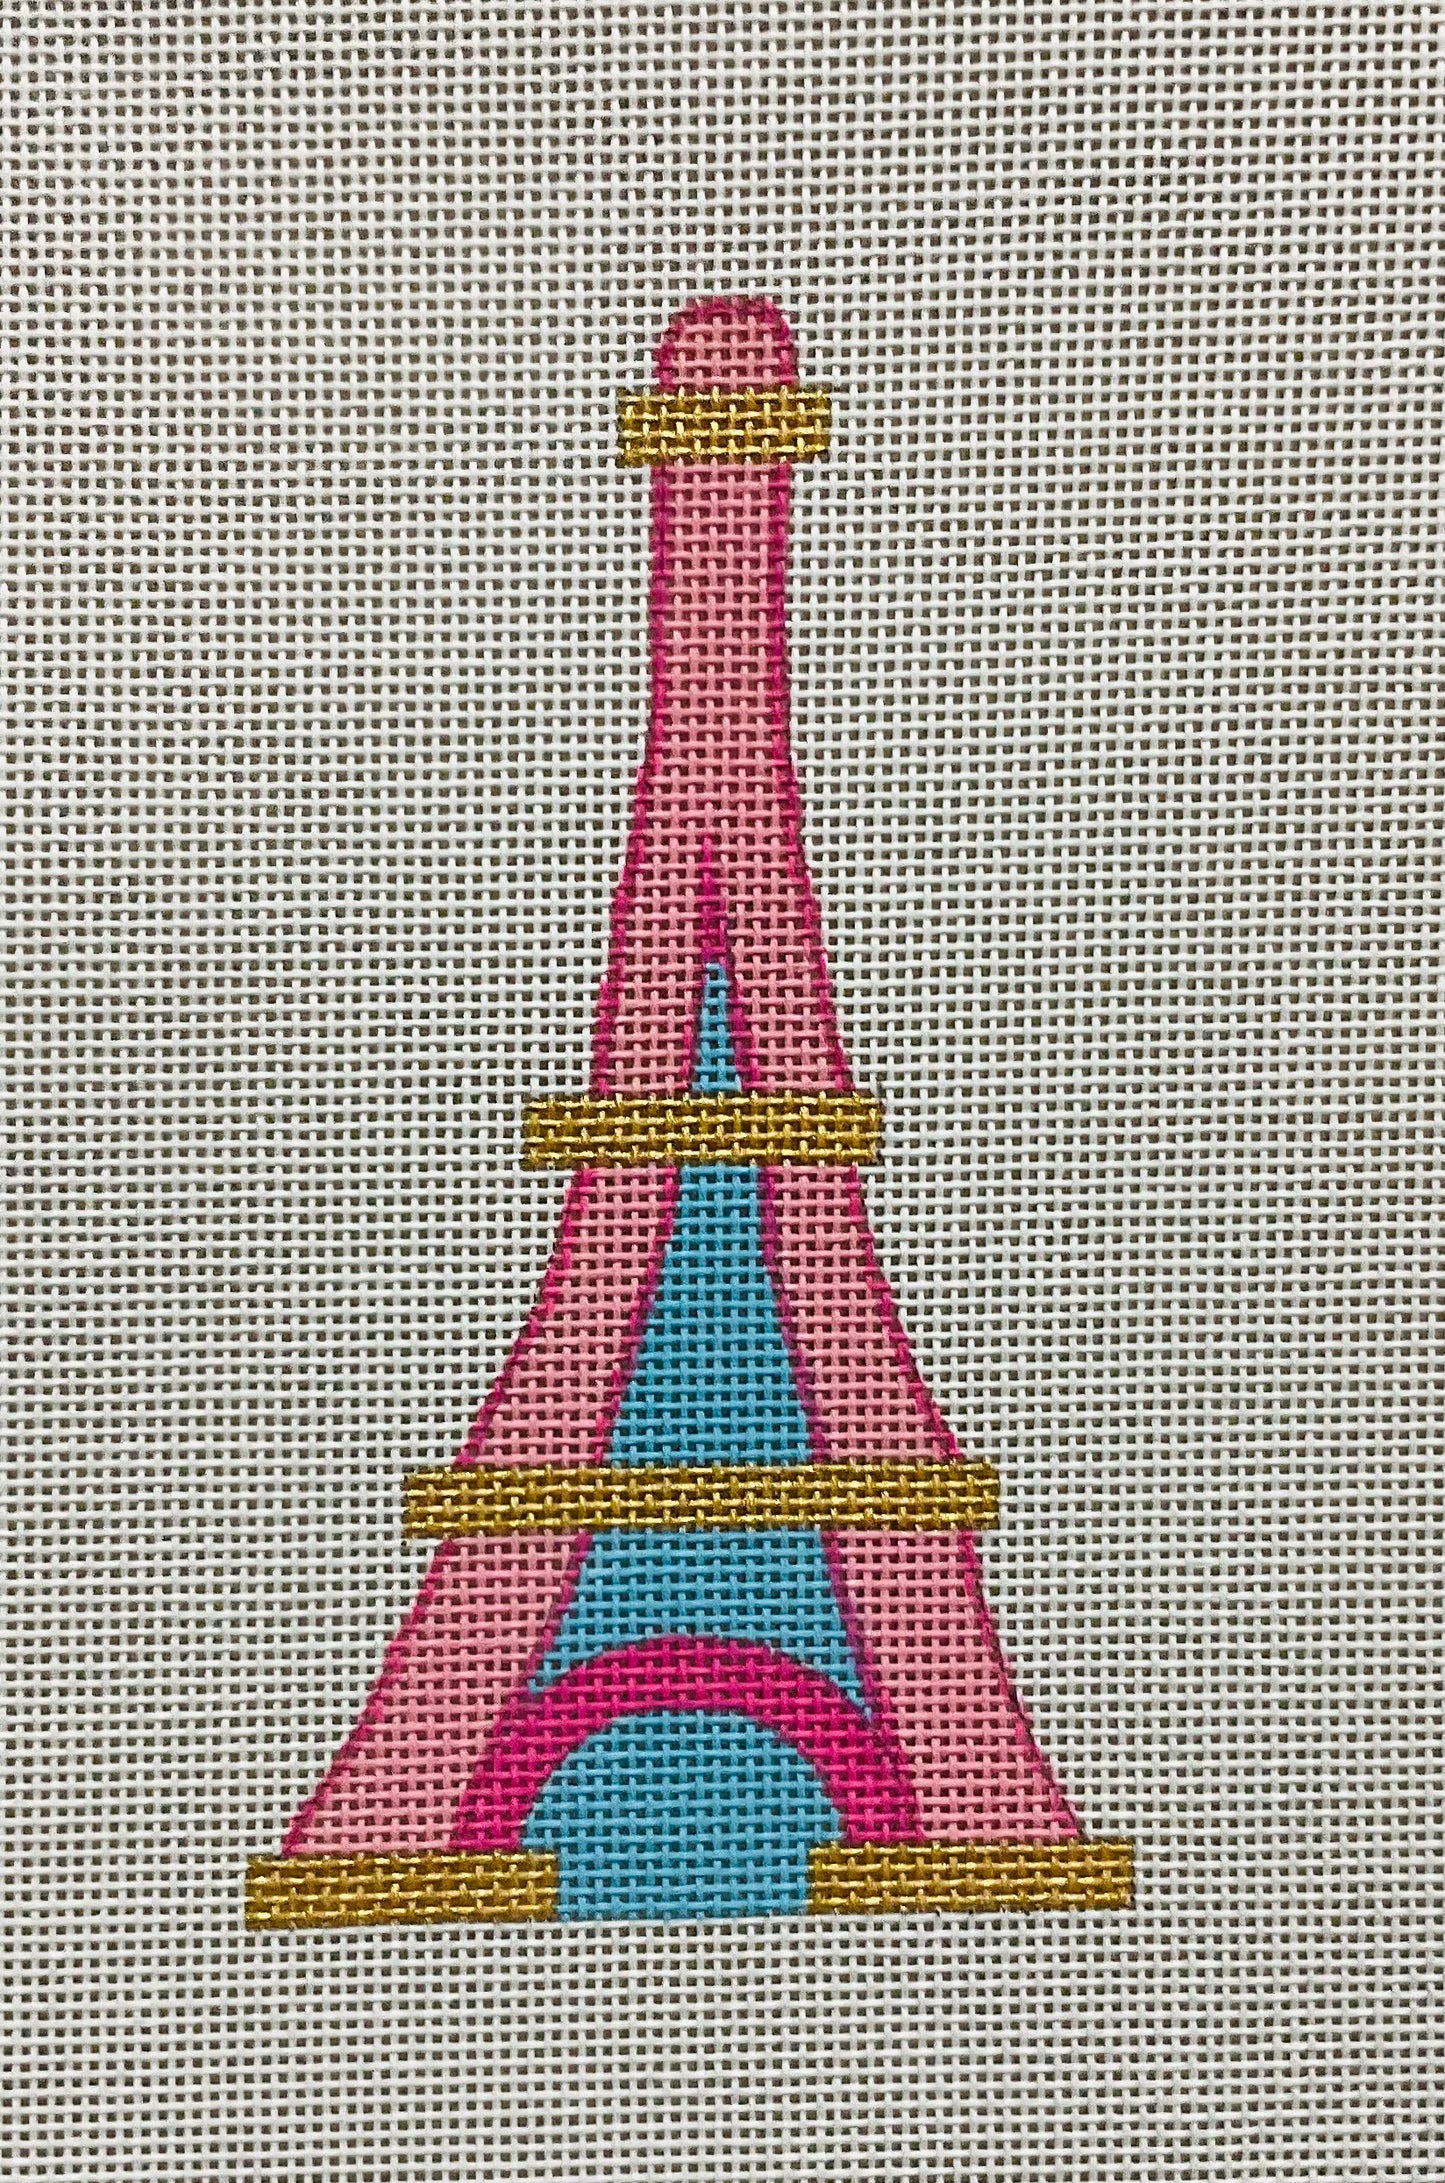 Eiffel Tower Pink (#2)